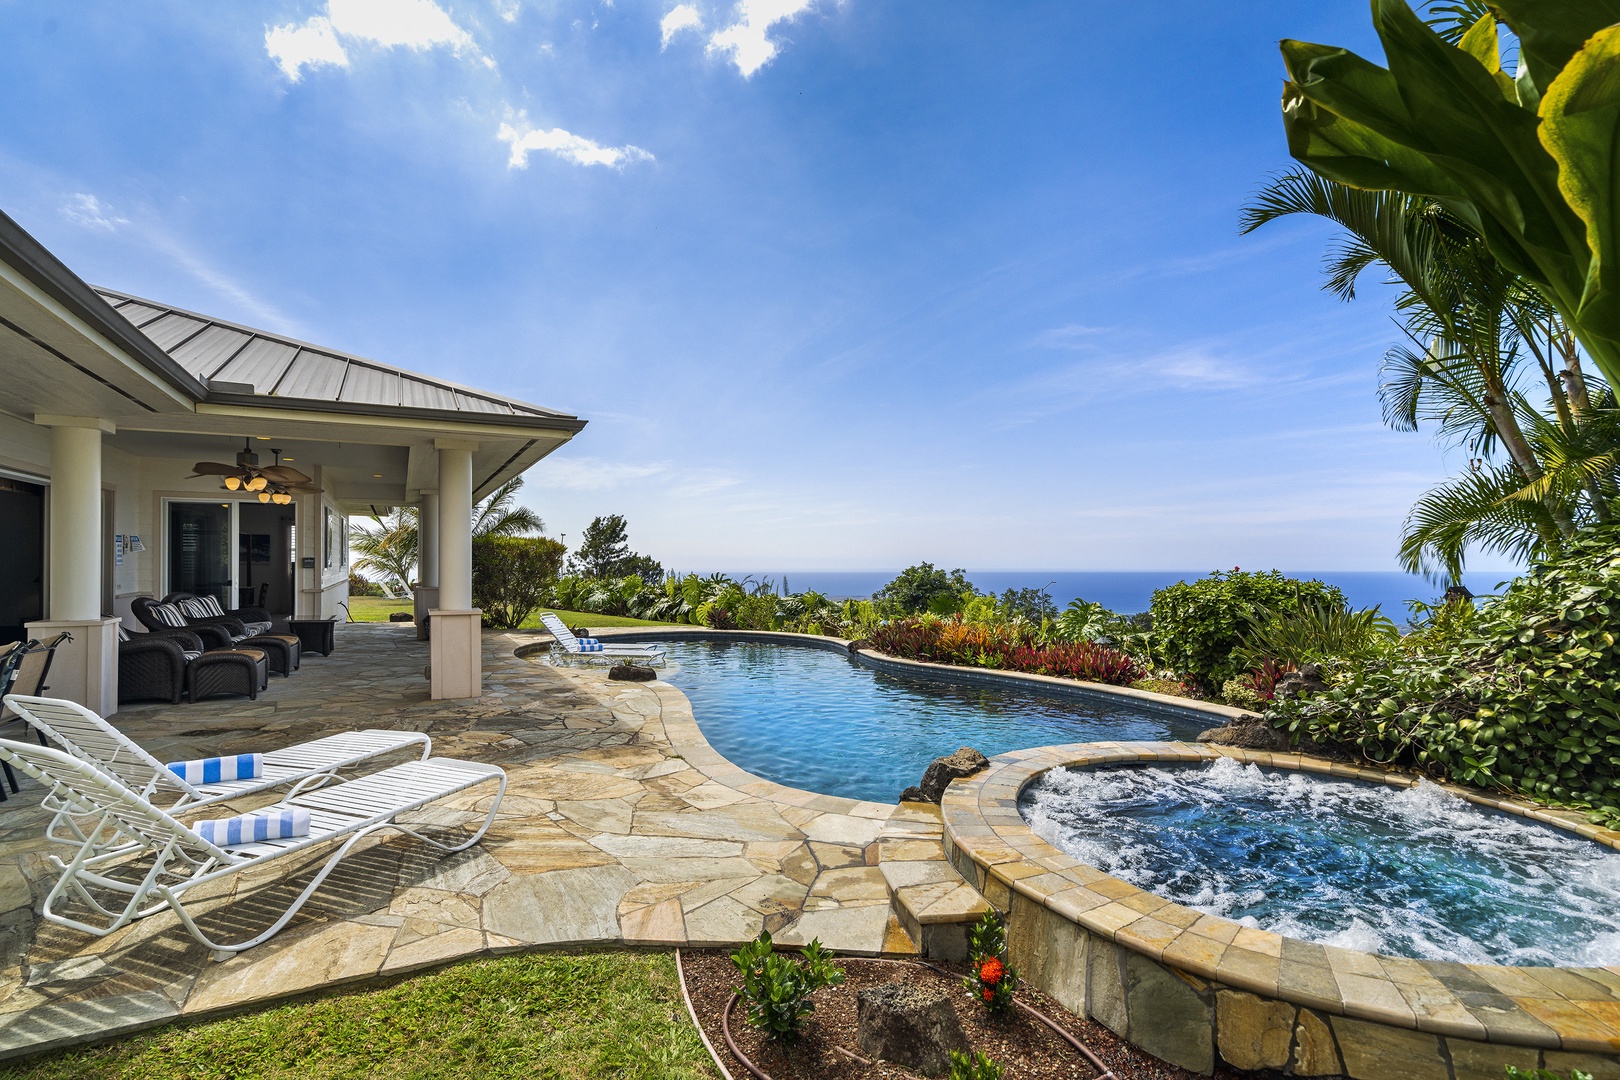 Kailua Kona Vacation Rentals, Piko Nani - Resort like pool & spa!